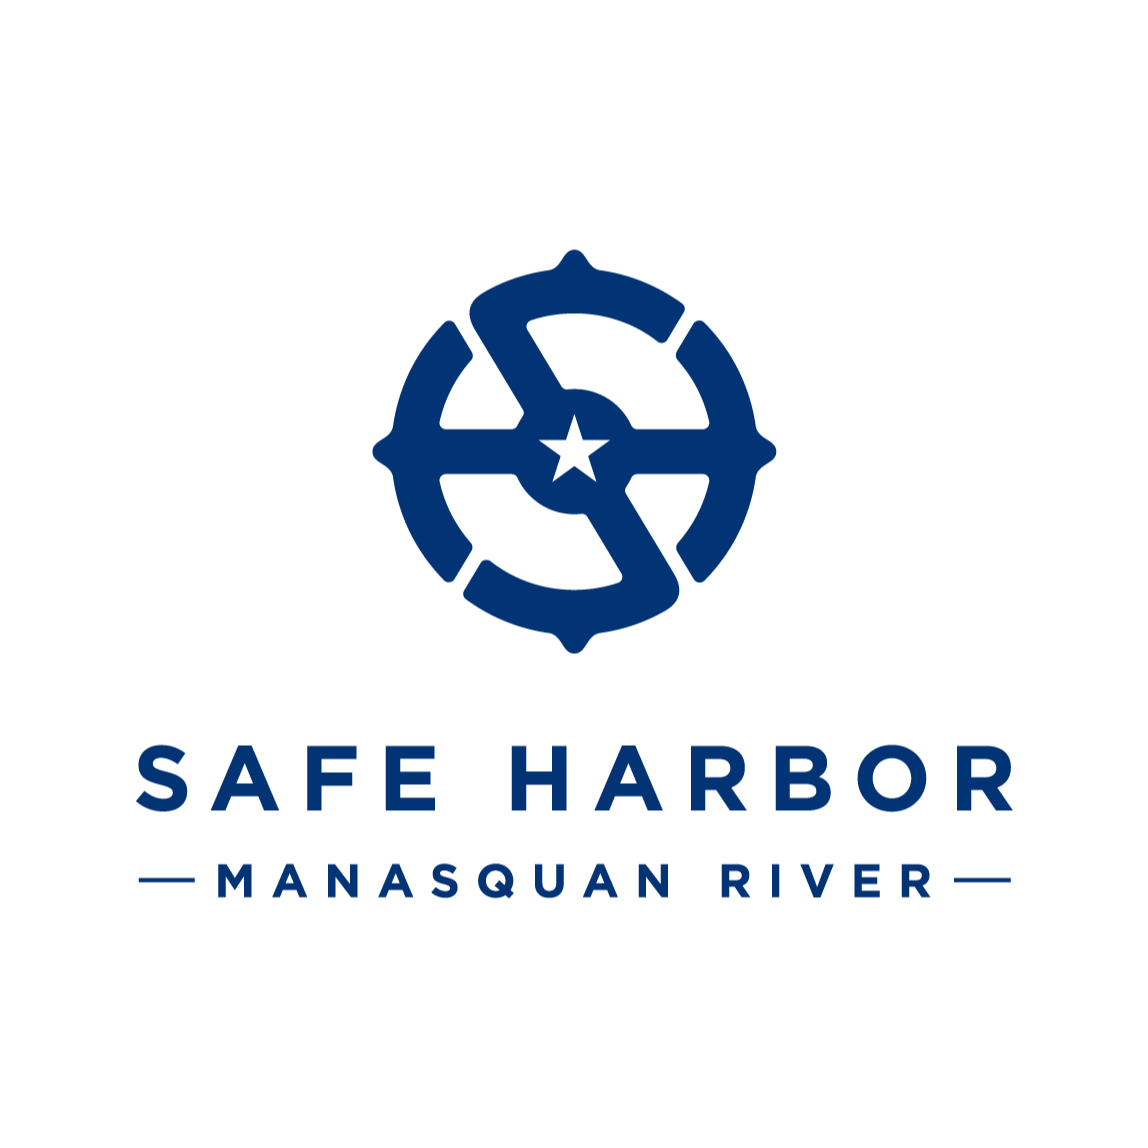 Safe Harbor Manasquan River